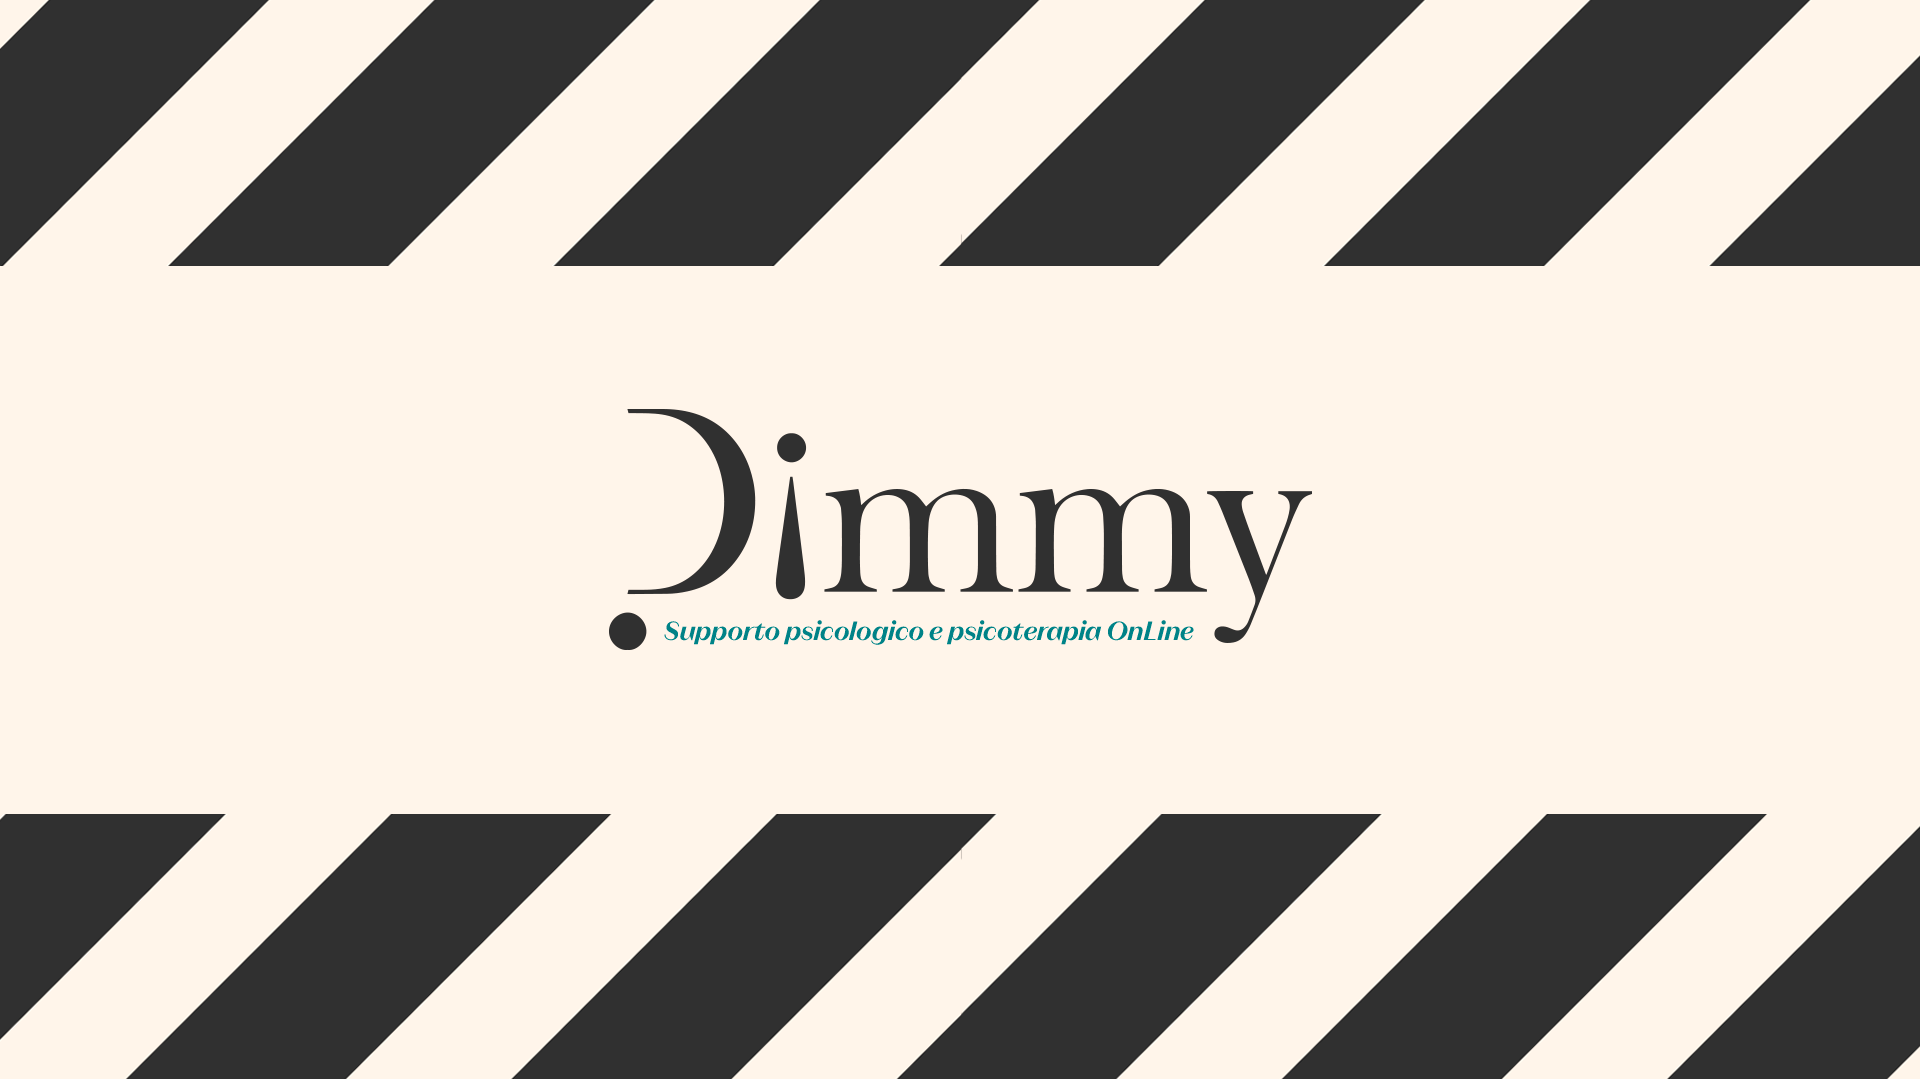 Dimmy